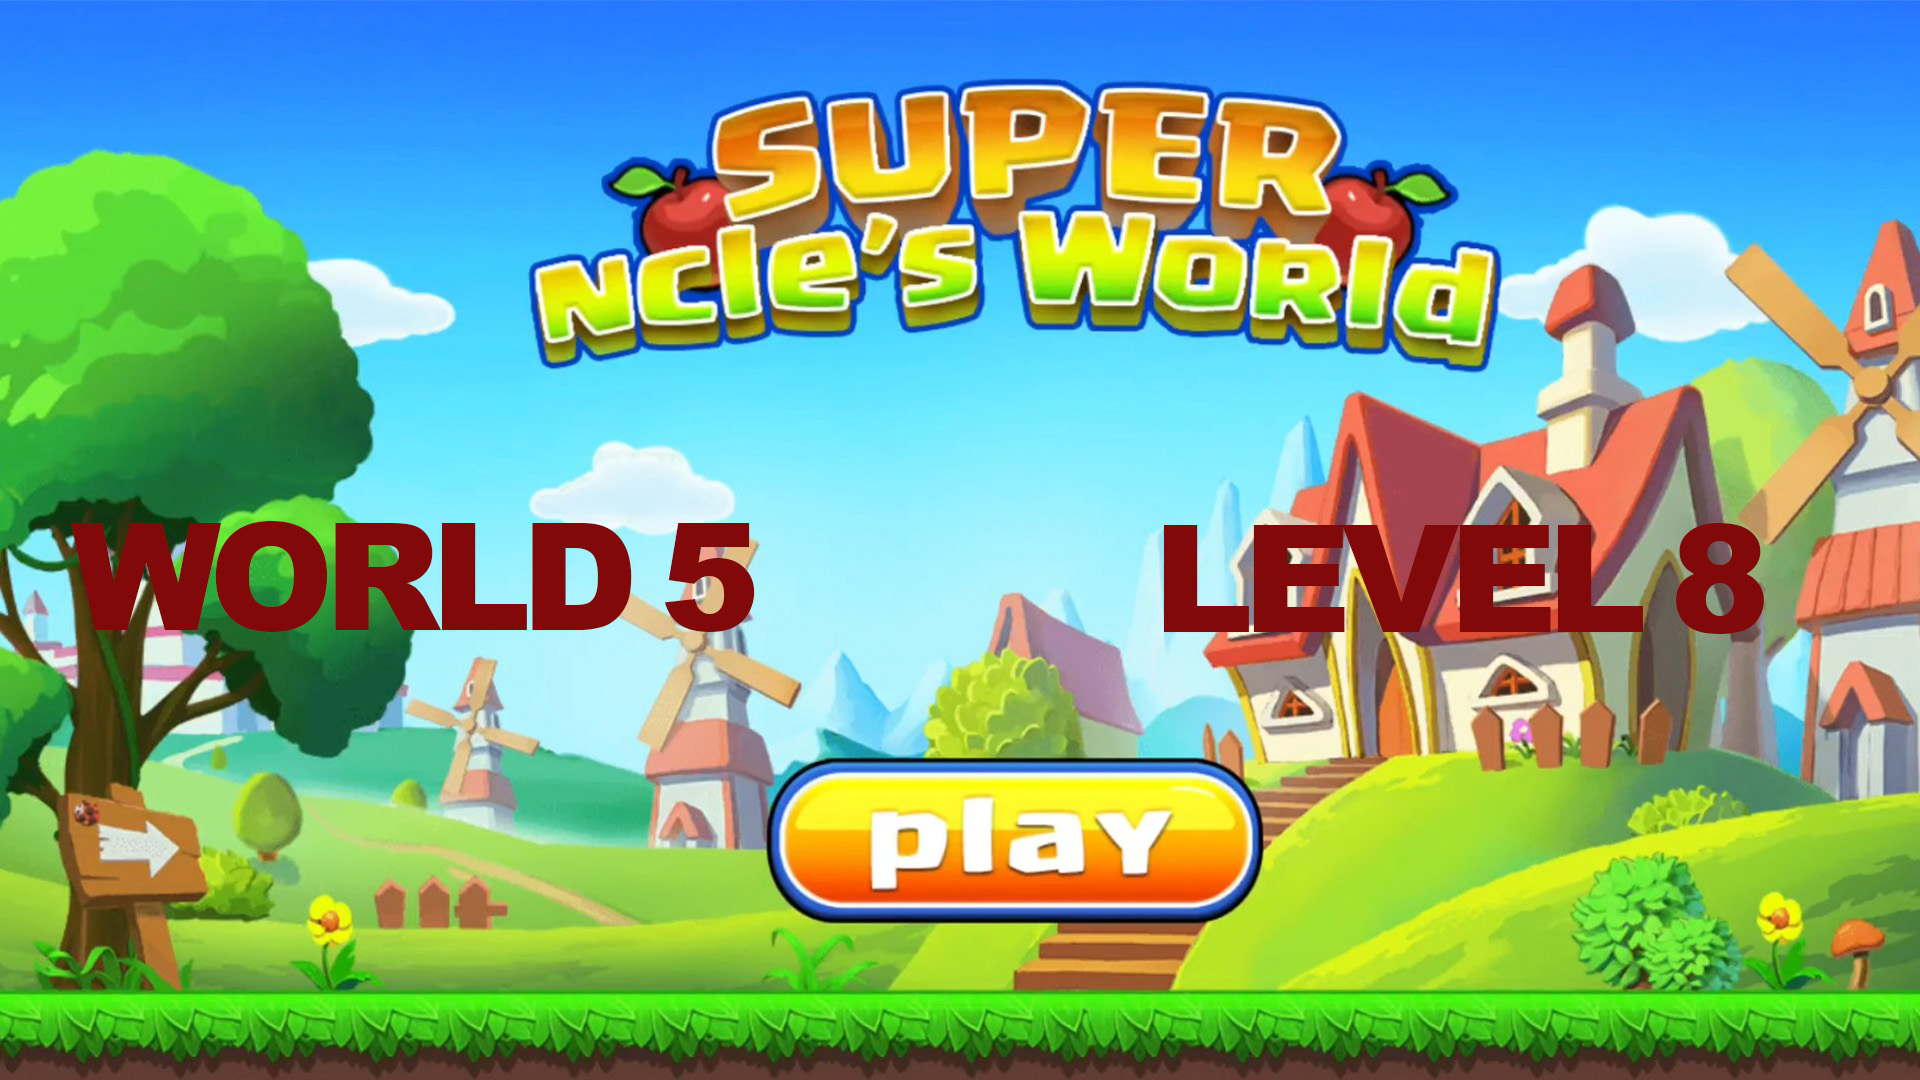 Super ncle's  World 5. Level 8.